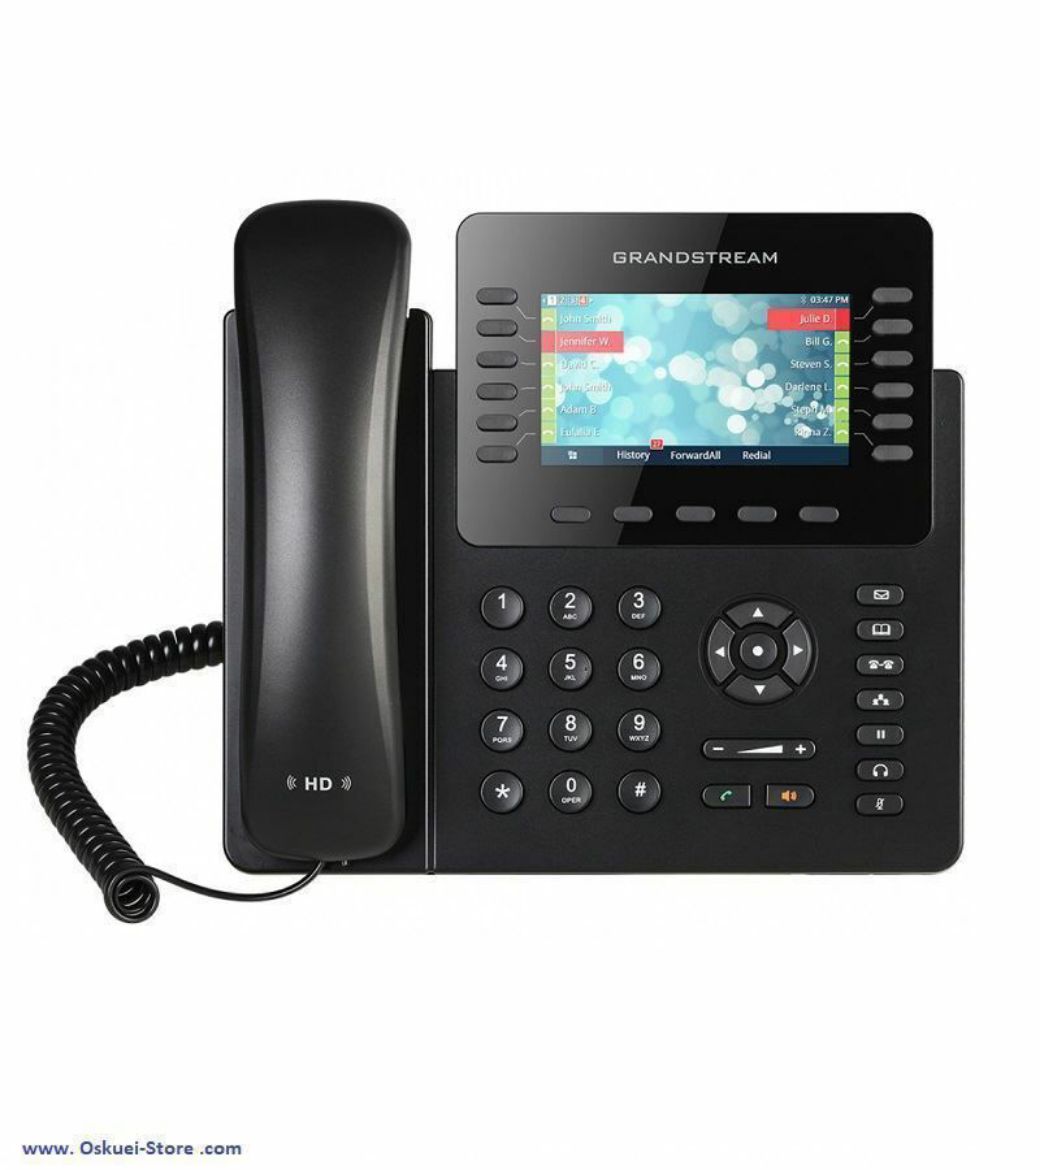 Grandstream GXP2170 VoIP SIP Telephone Black